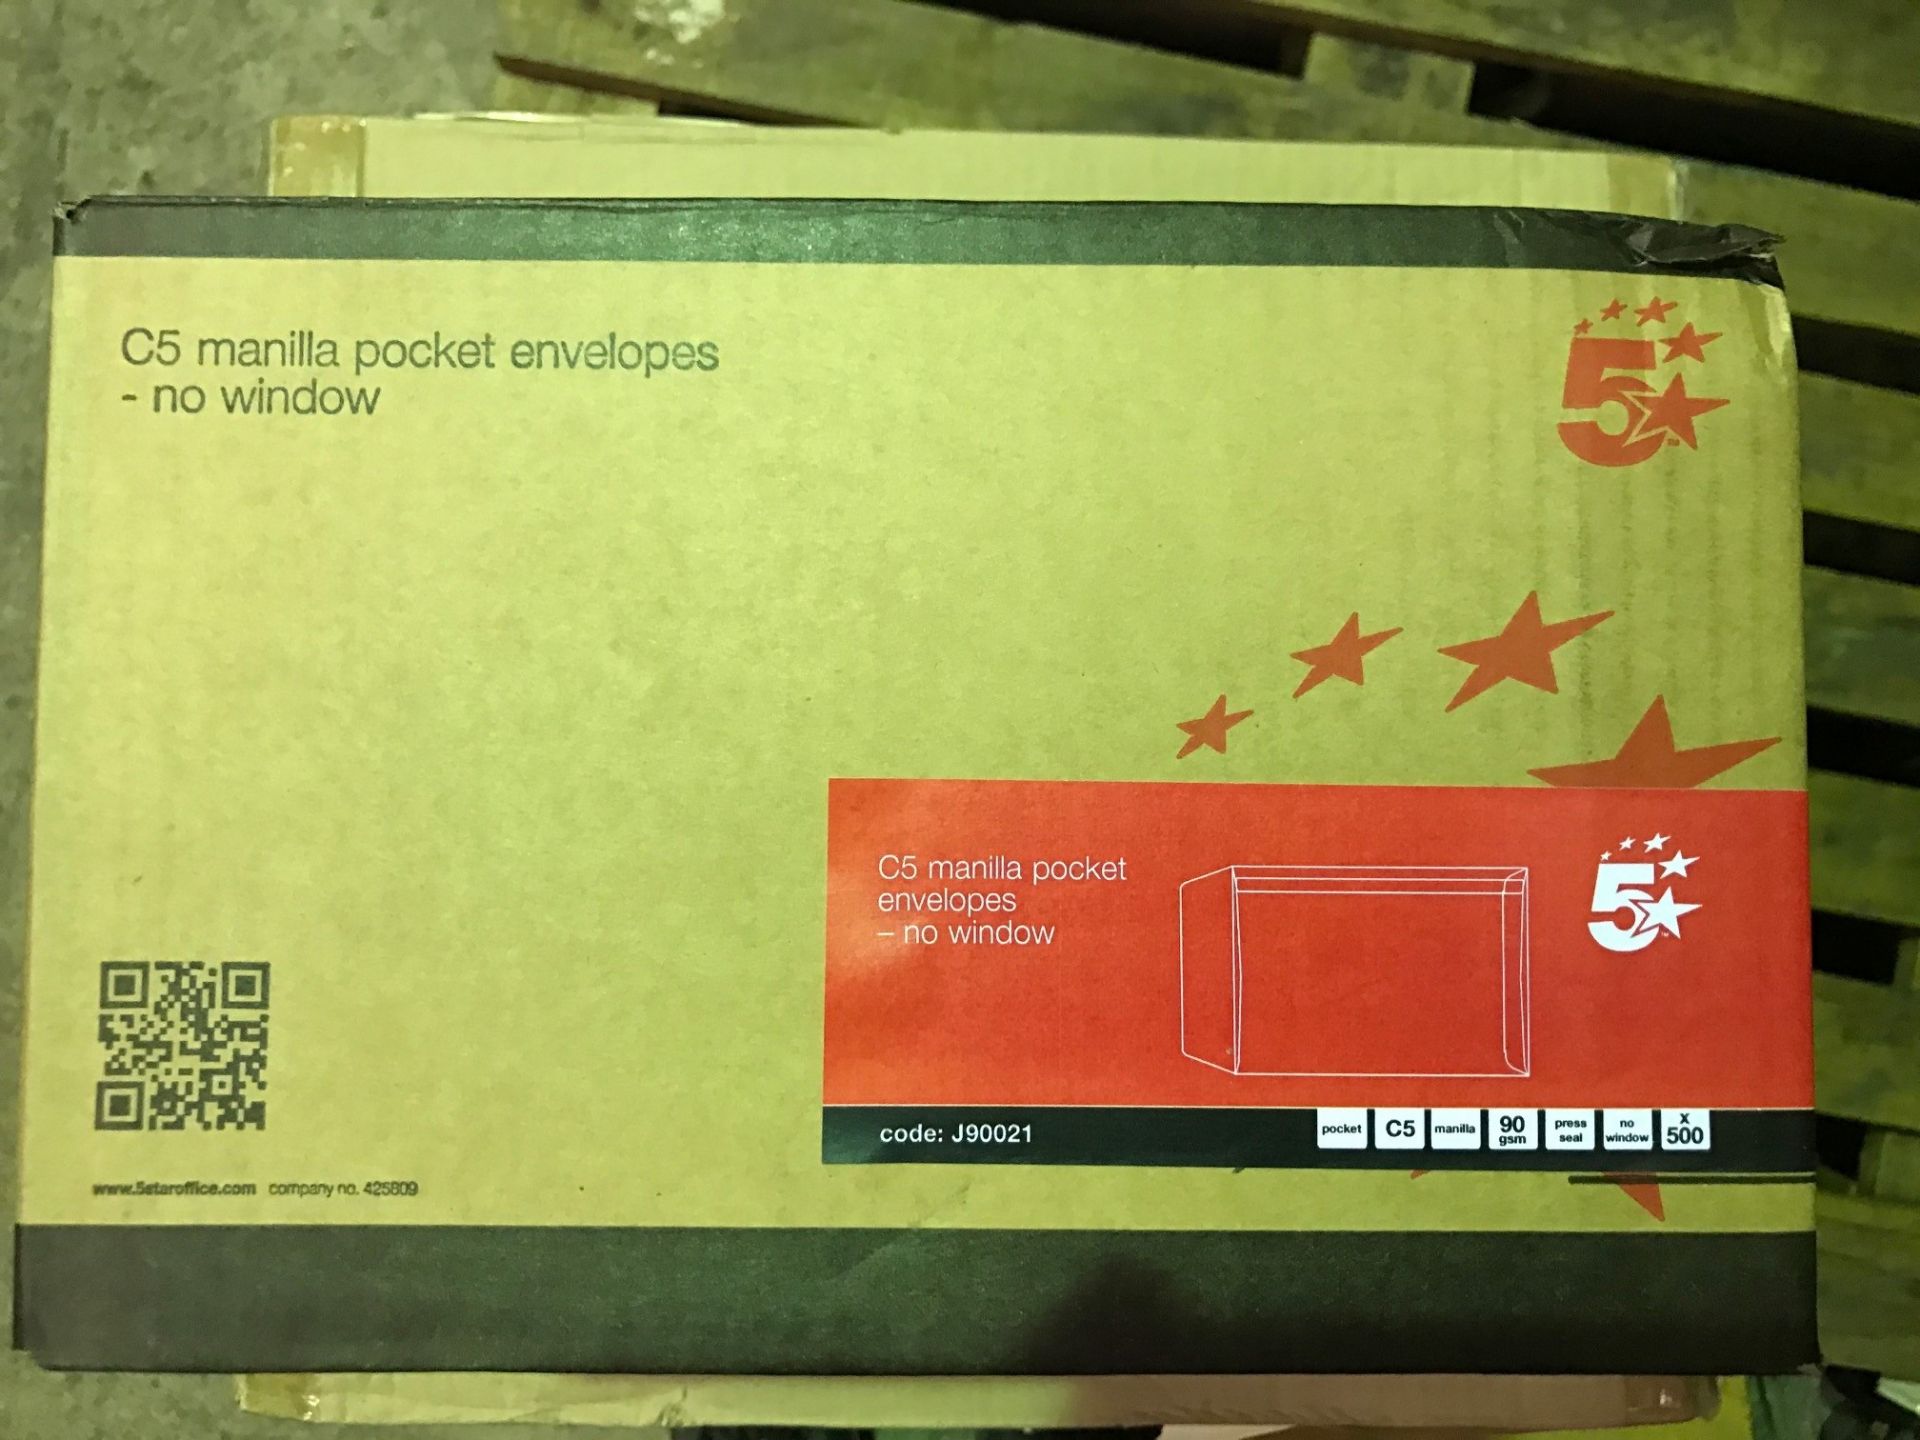 3 x Boxes of 5 Star C5 Manilla Pocket Envelopes - 1500 Envelopes Total, RRP £25 Per Box